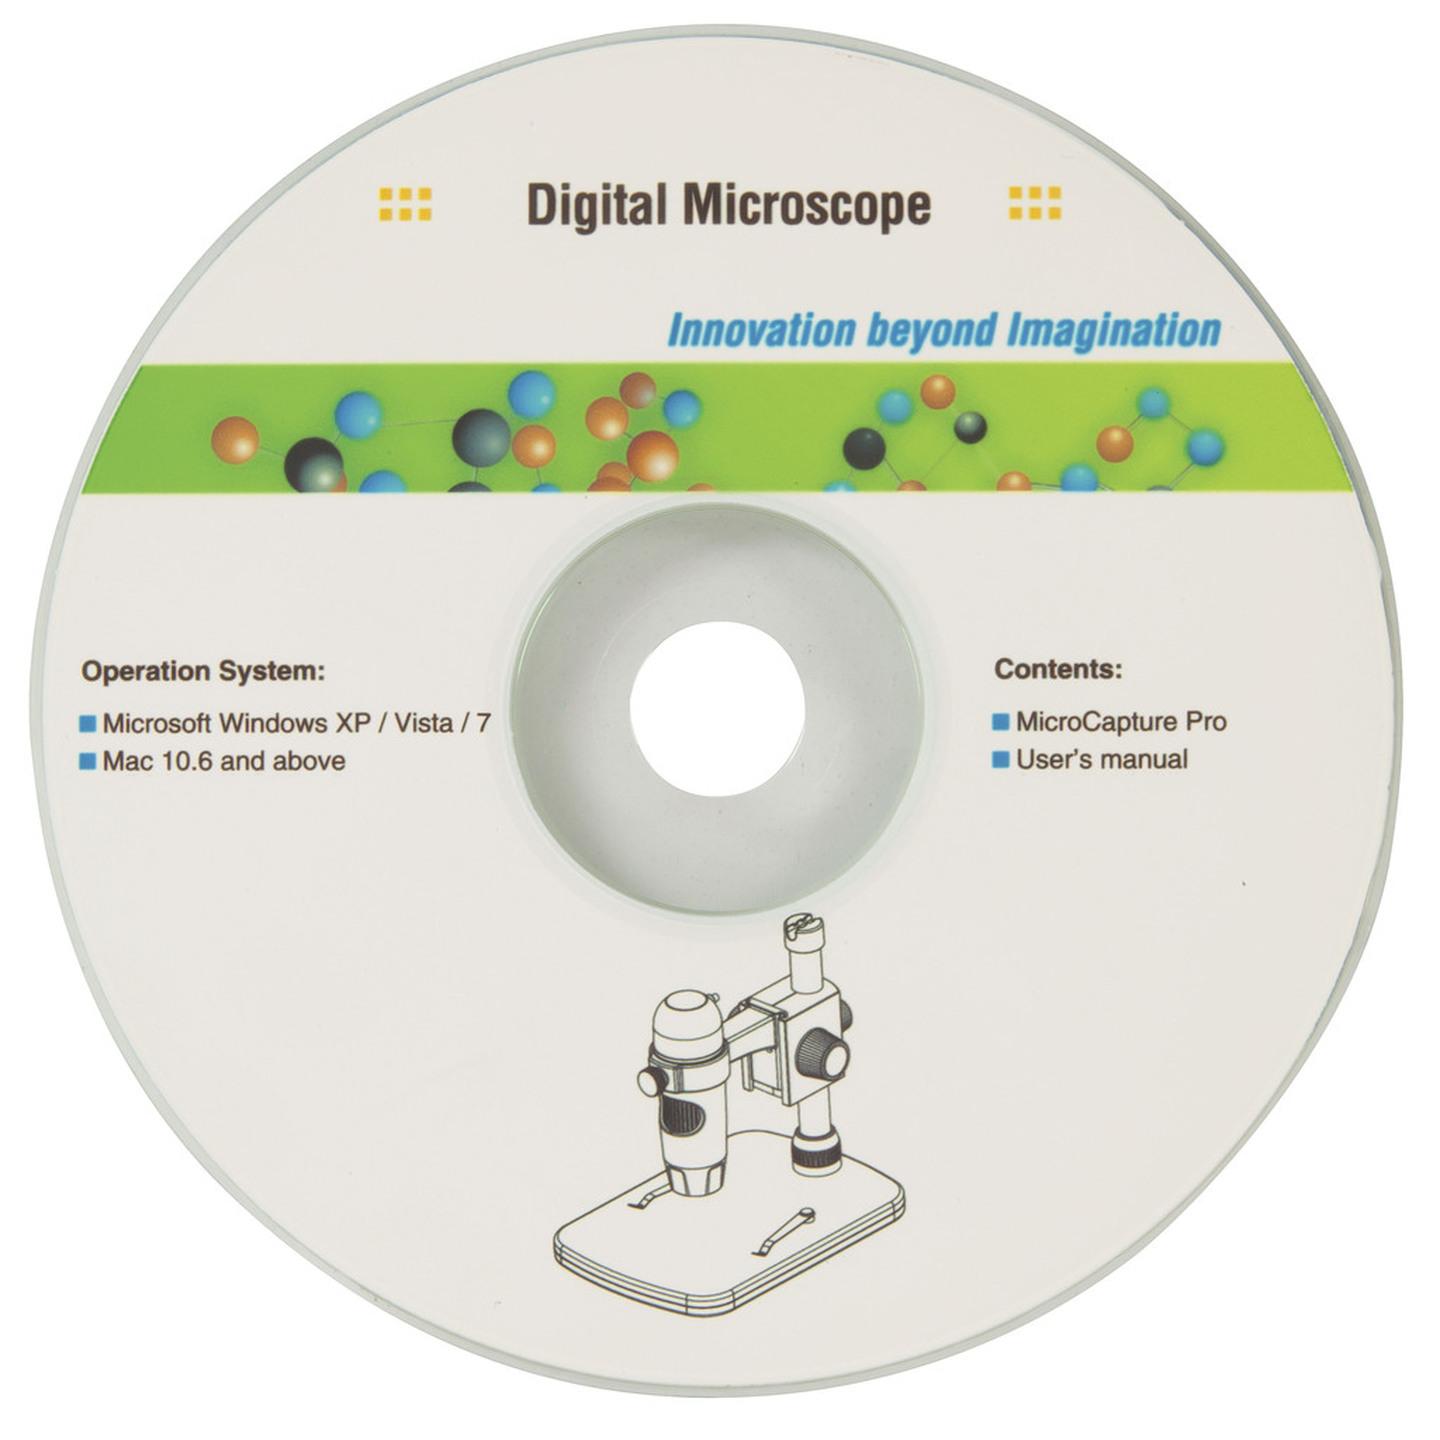 Digitech 5MP USB Digital Microscope